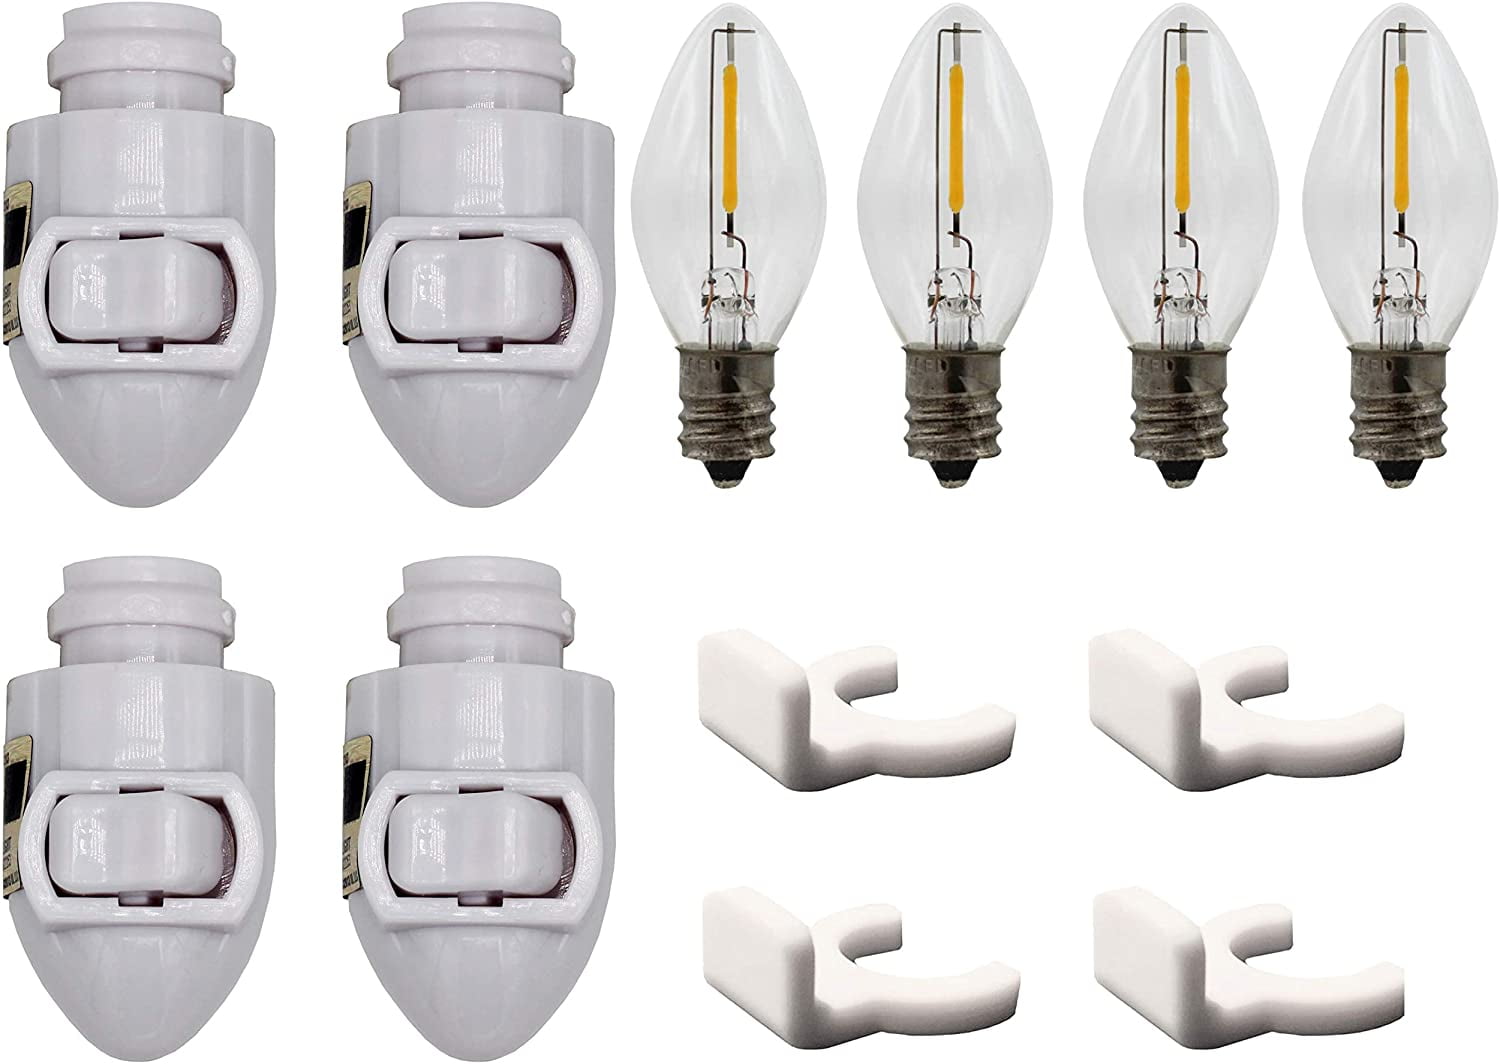 White Sensor Night Light Module Includes 4 Bulbs and 4 Metal Clips 